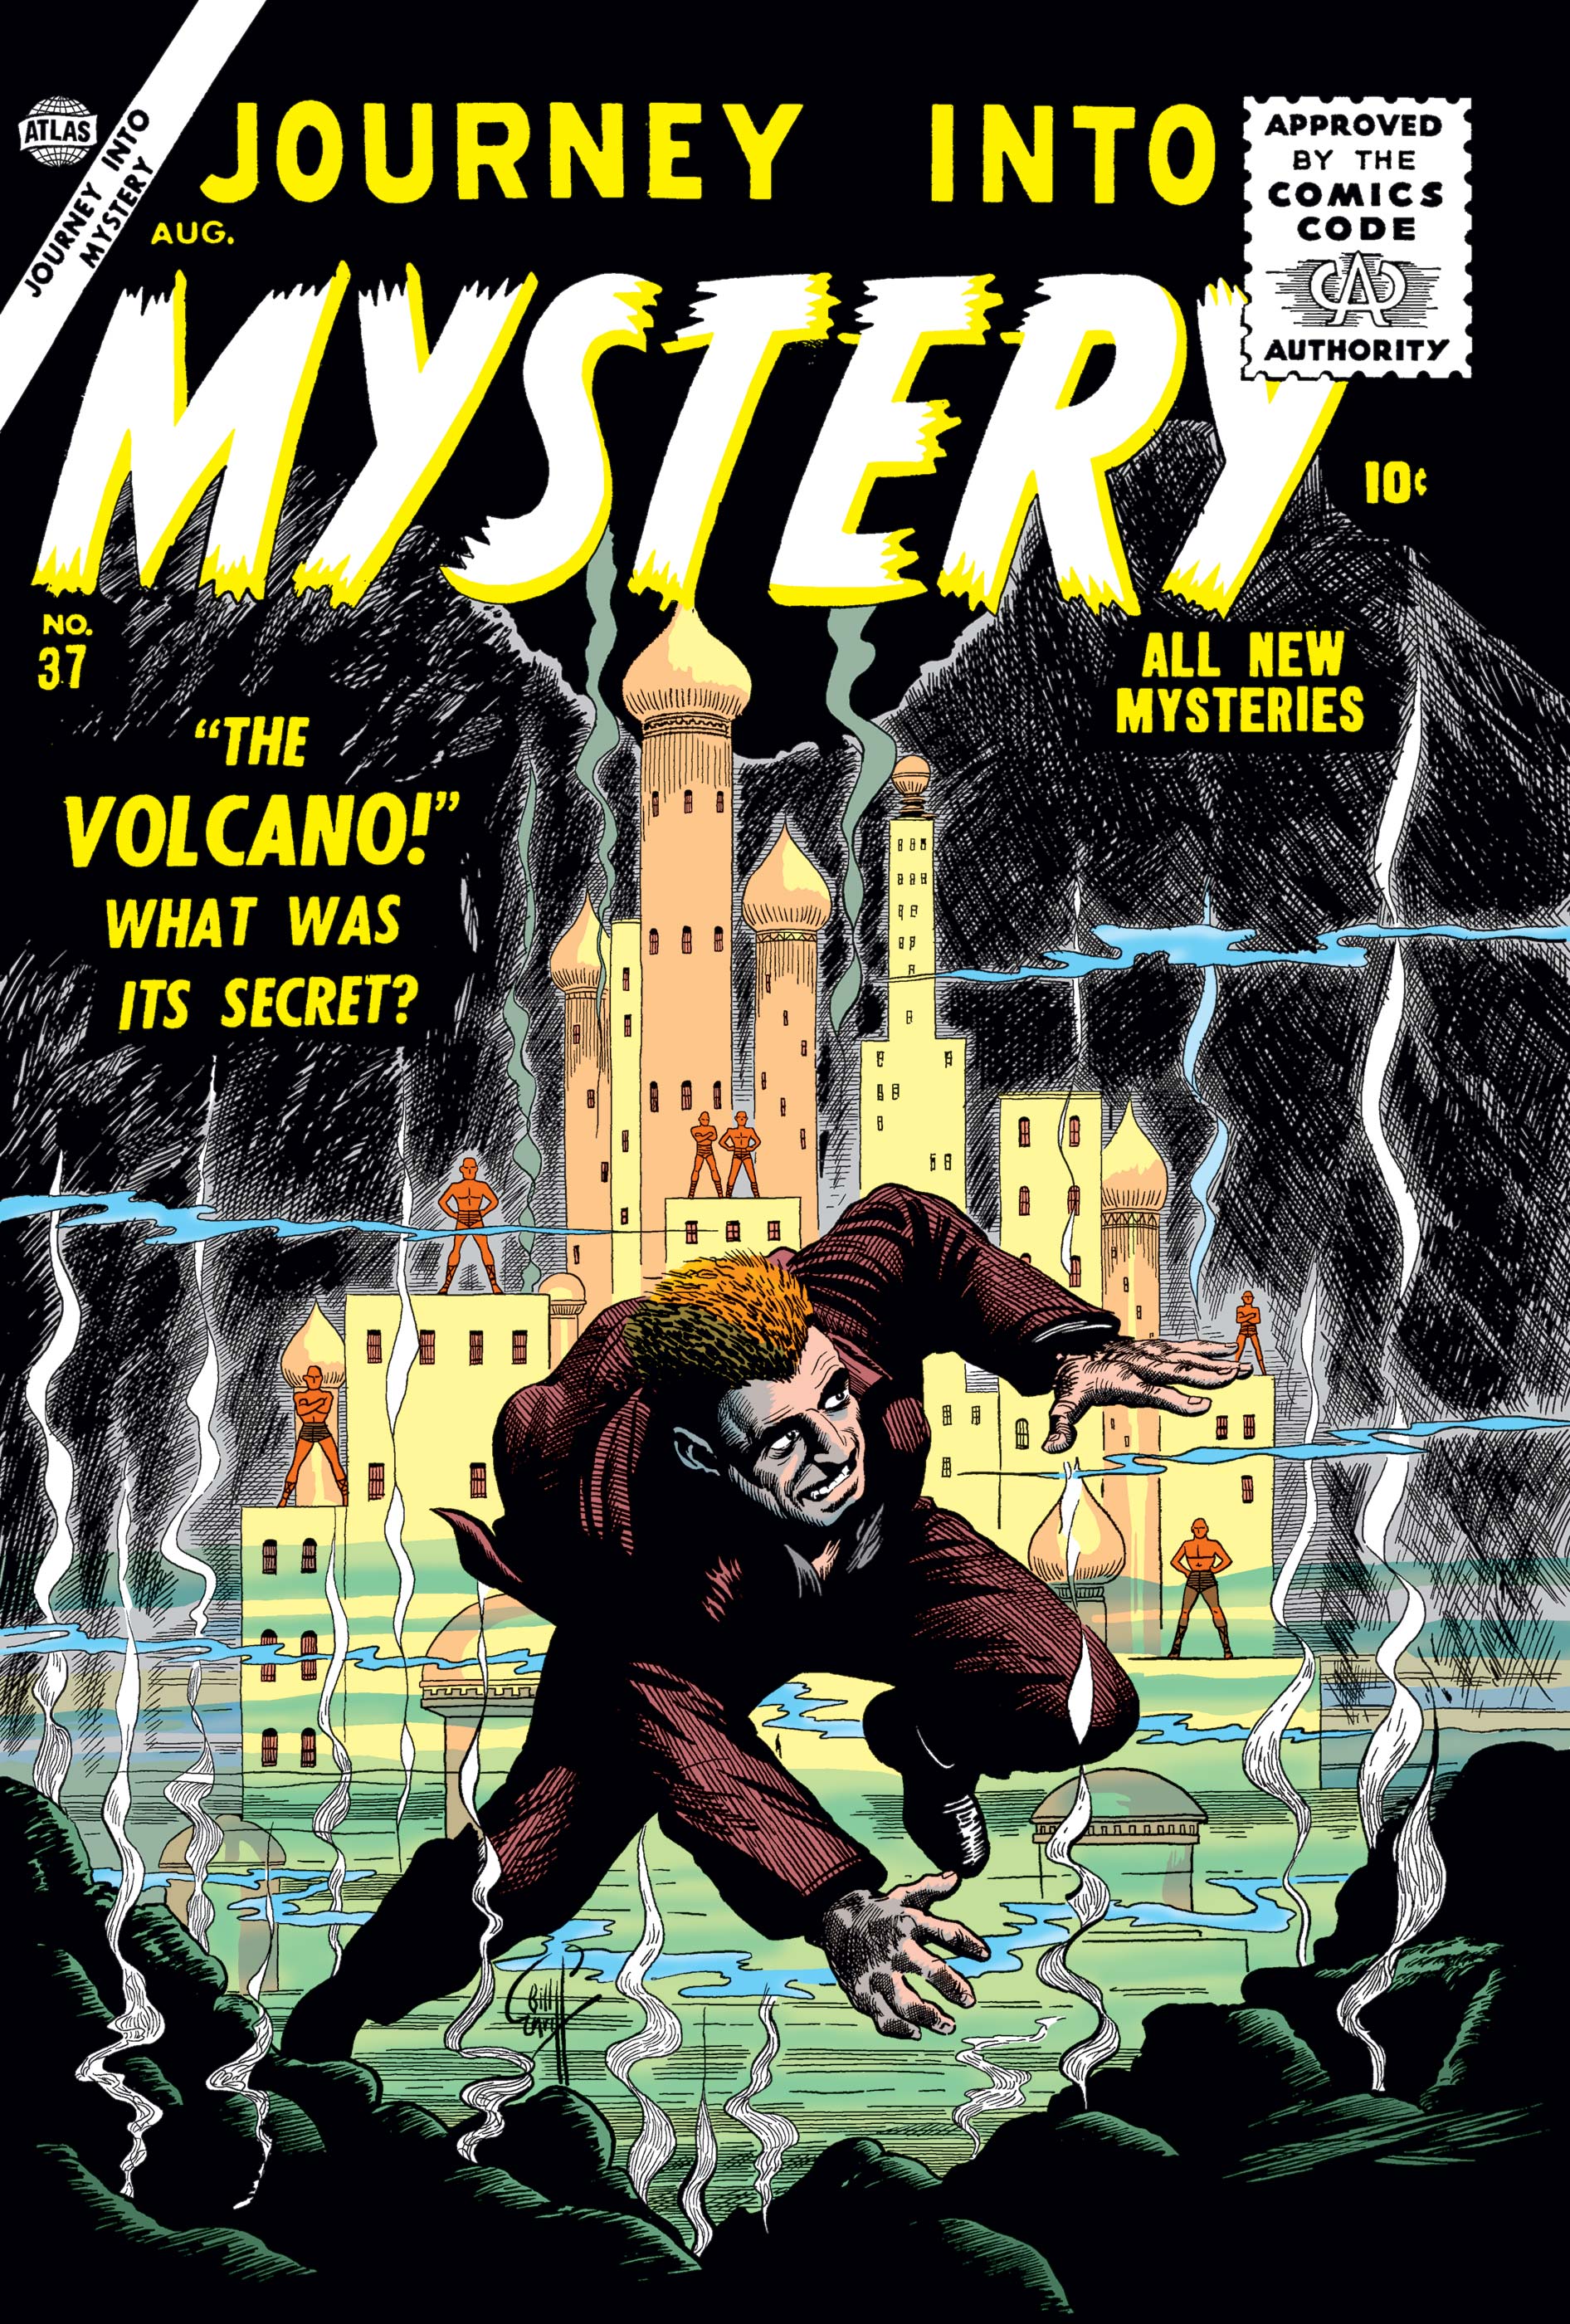 Journey Into Mystery (1952) #37